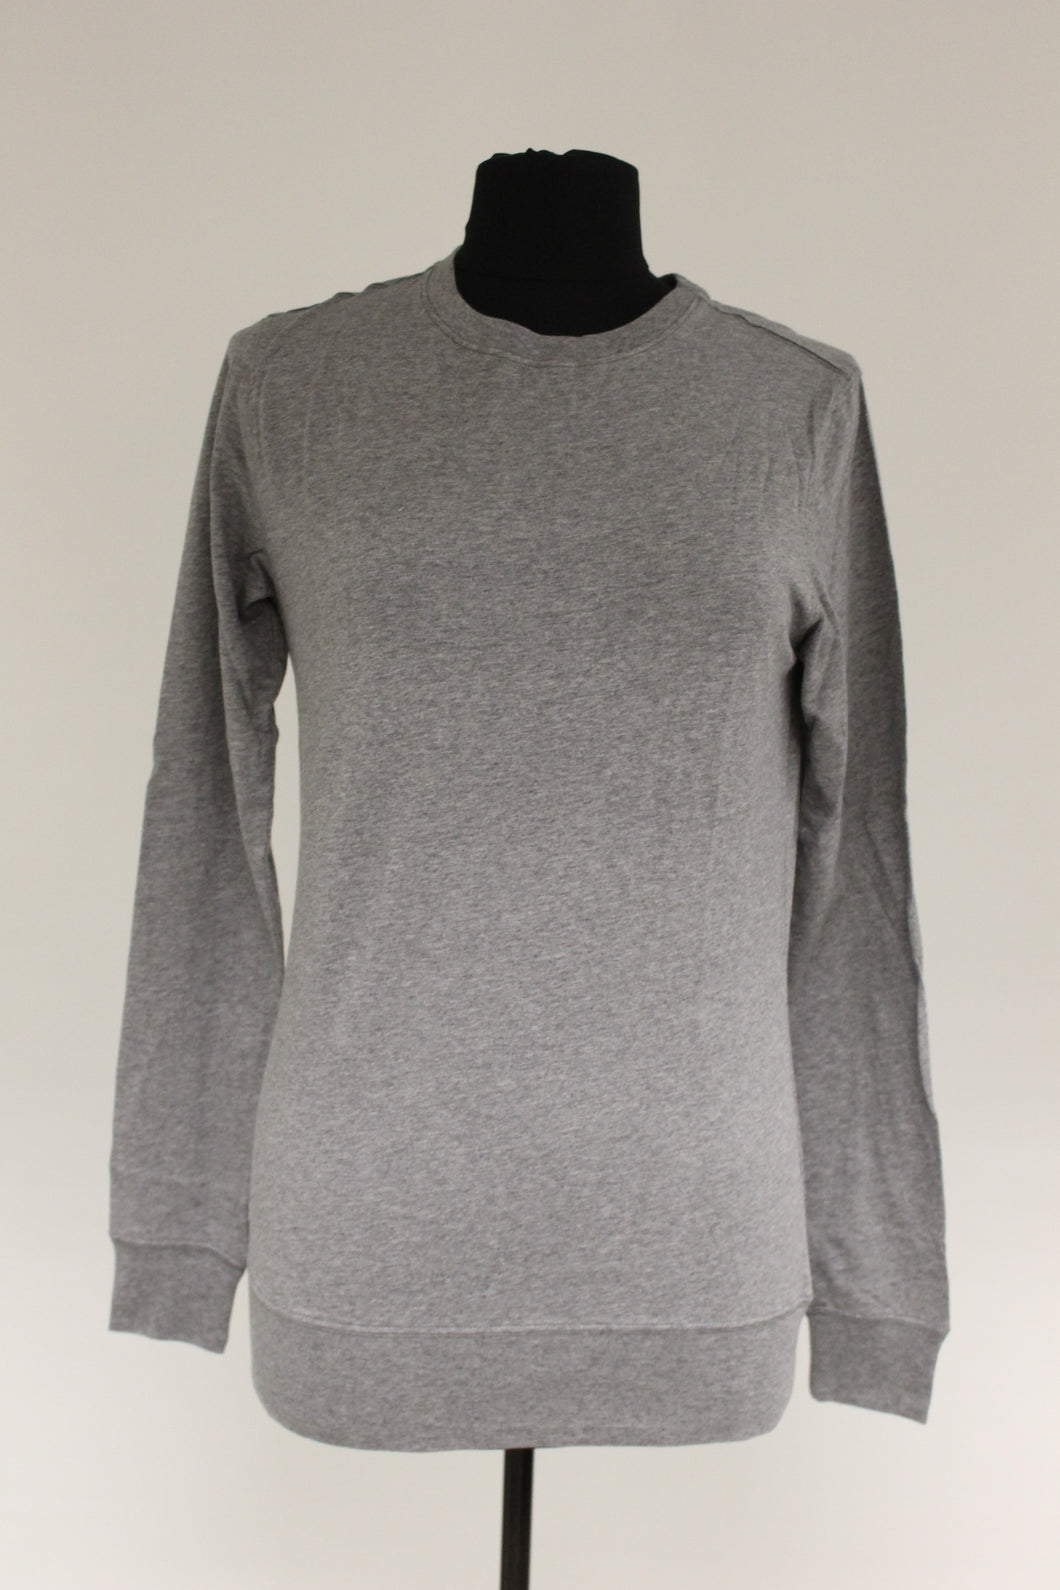 Mae Basic Sweatshirt, Size: Small, Grey, New!